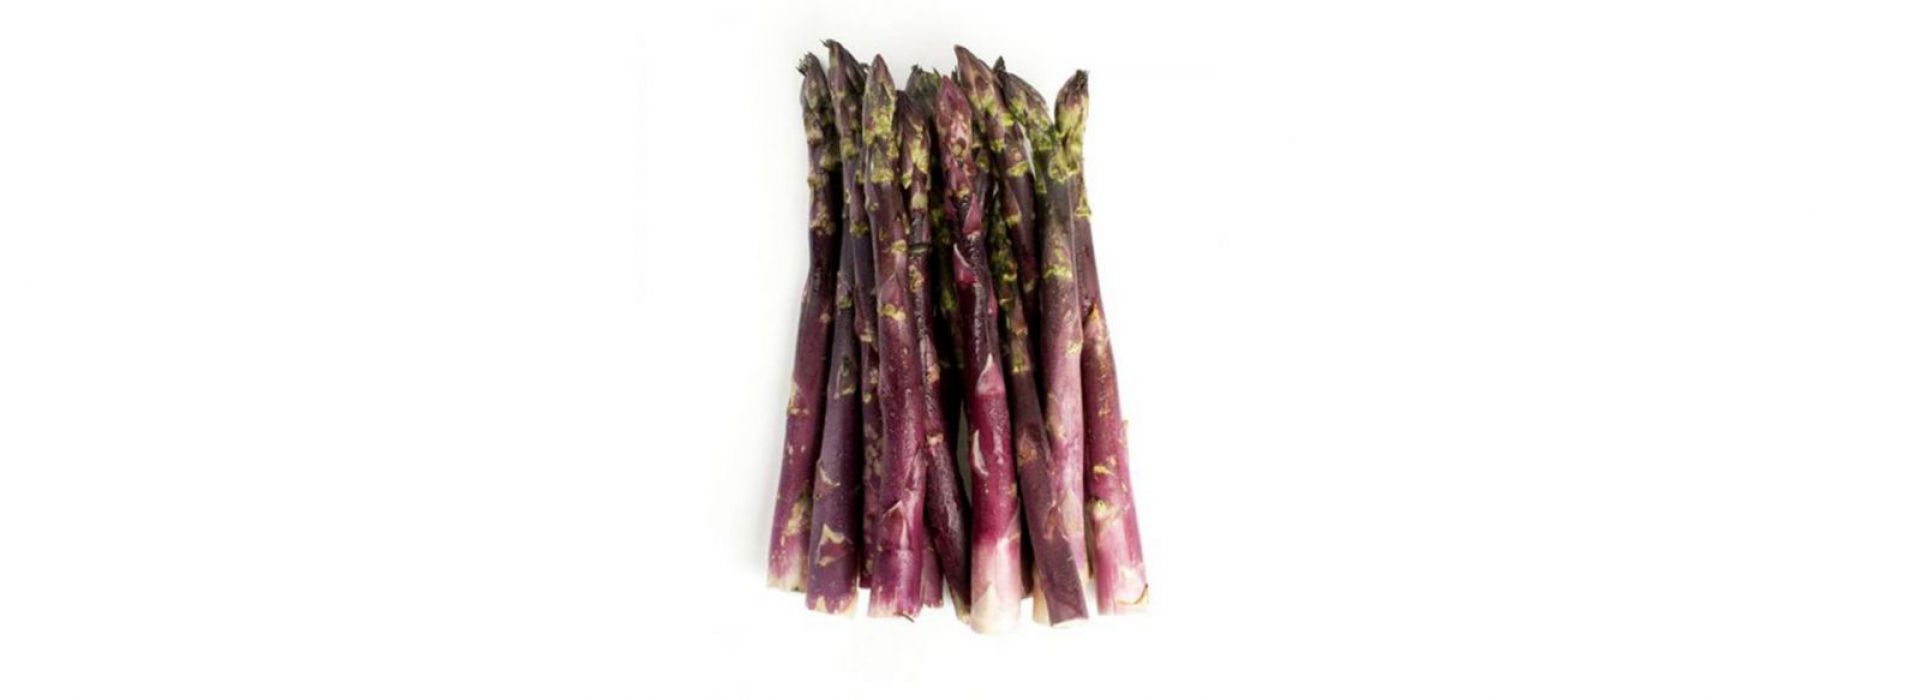  Purple Asparagus